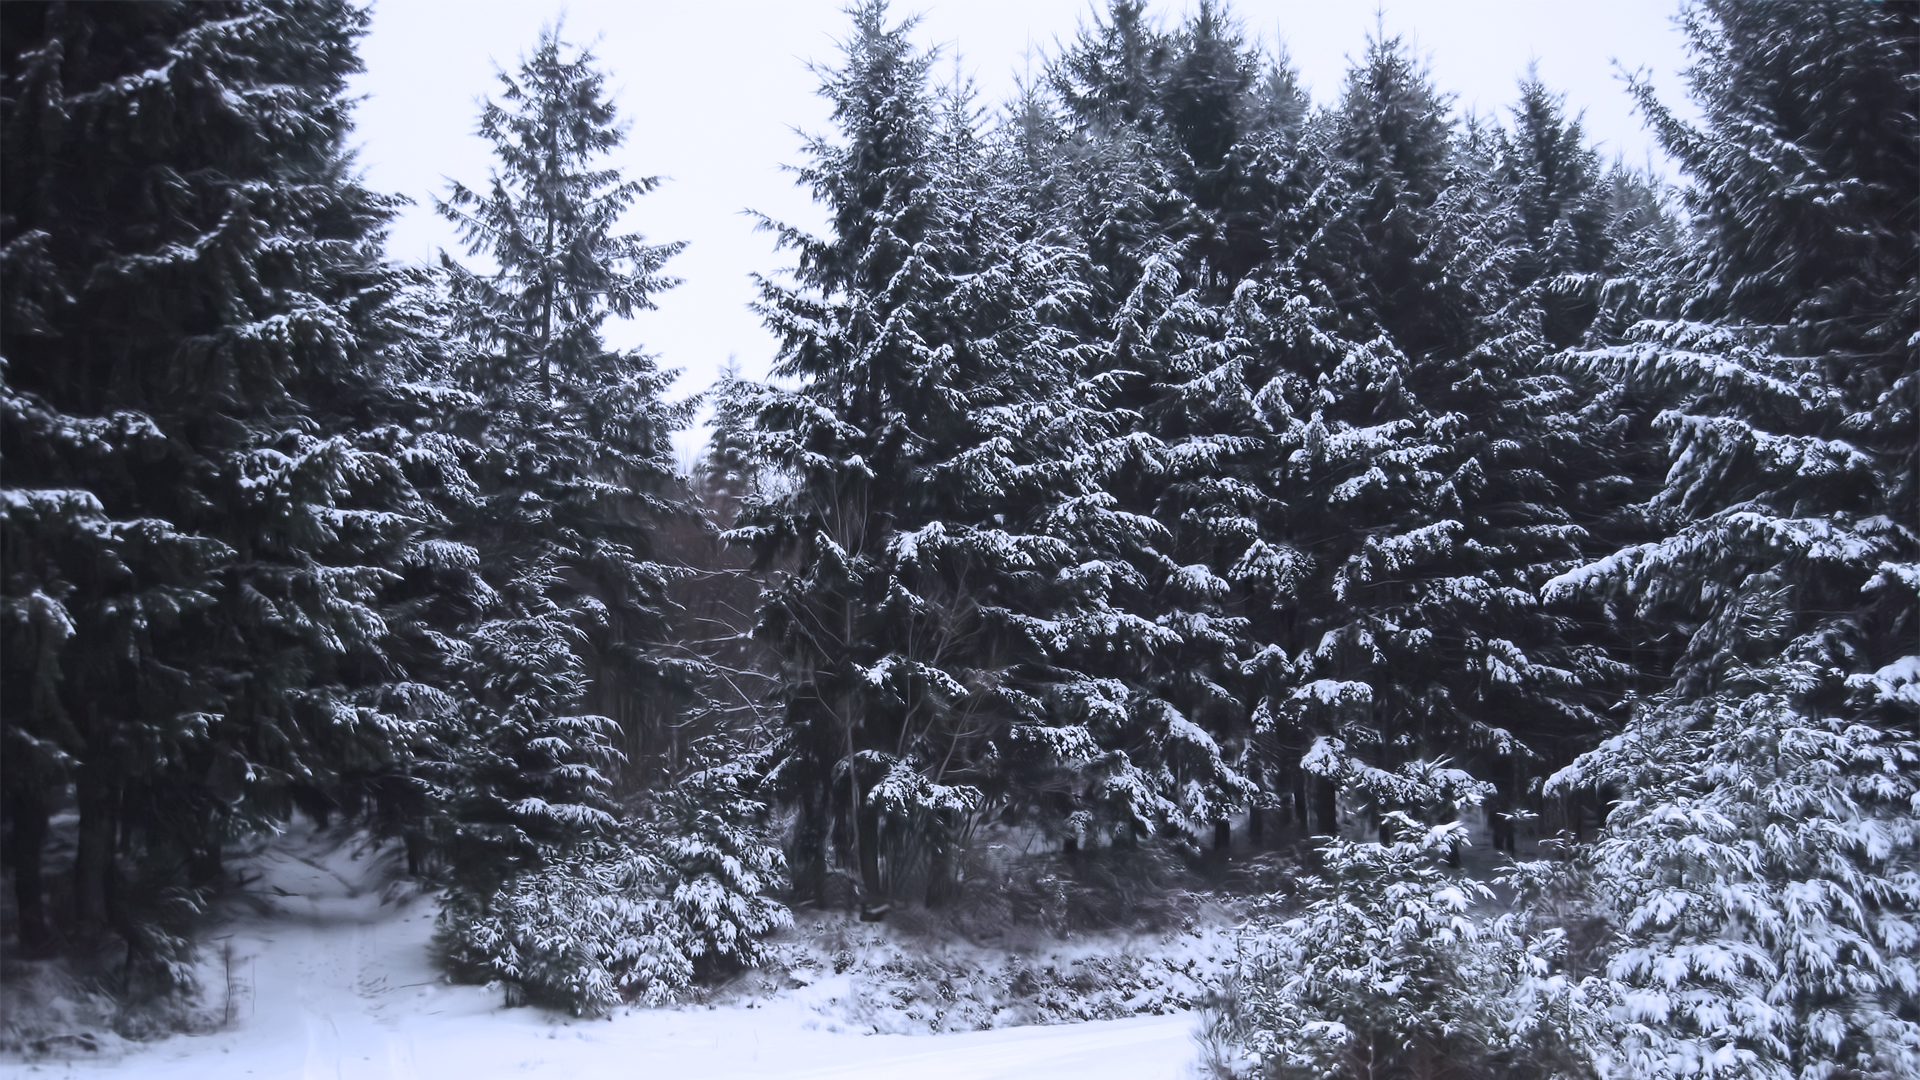 Wallpaper 1080p Frozen Forest By Iamsointense